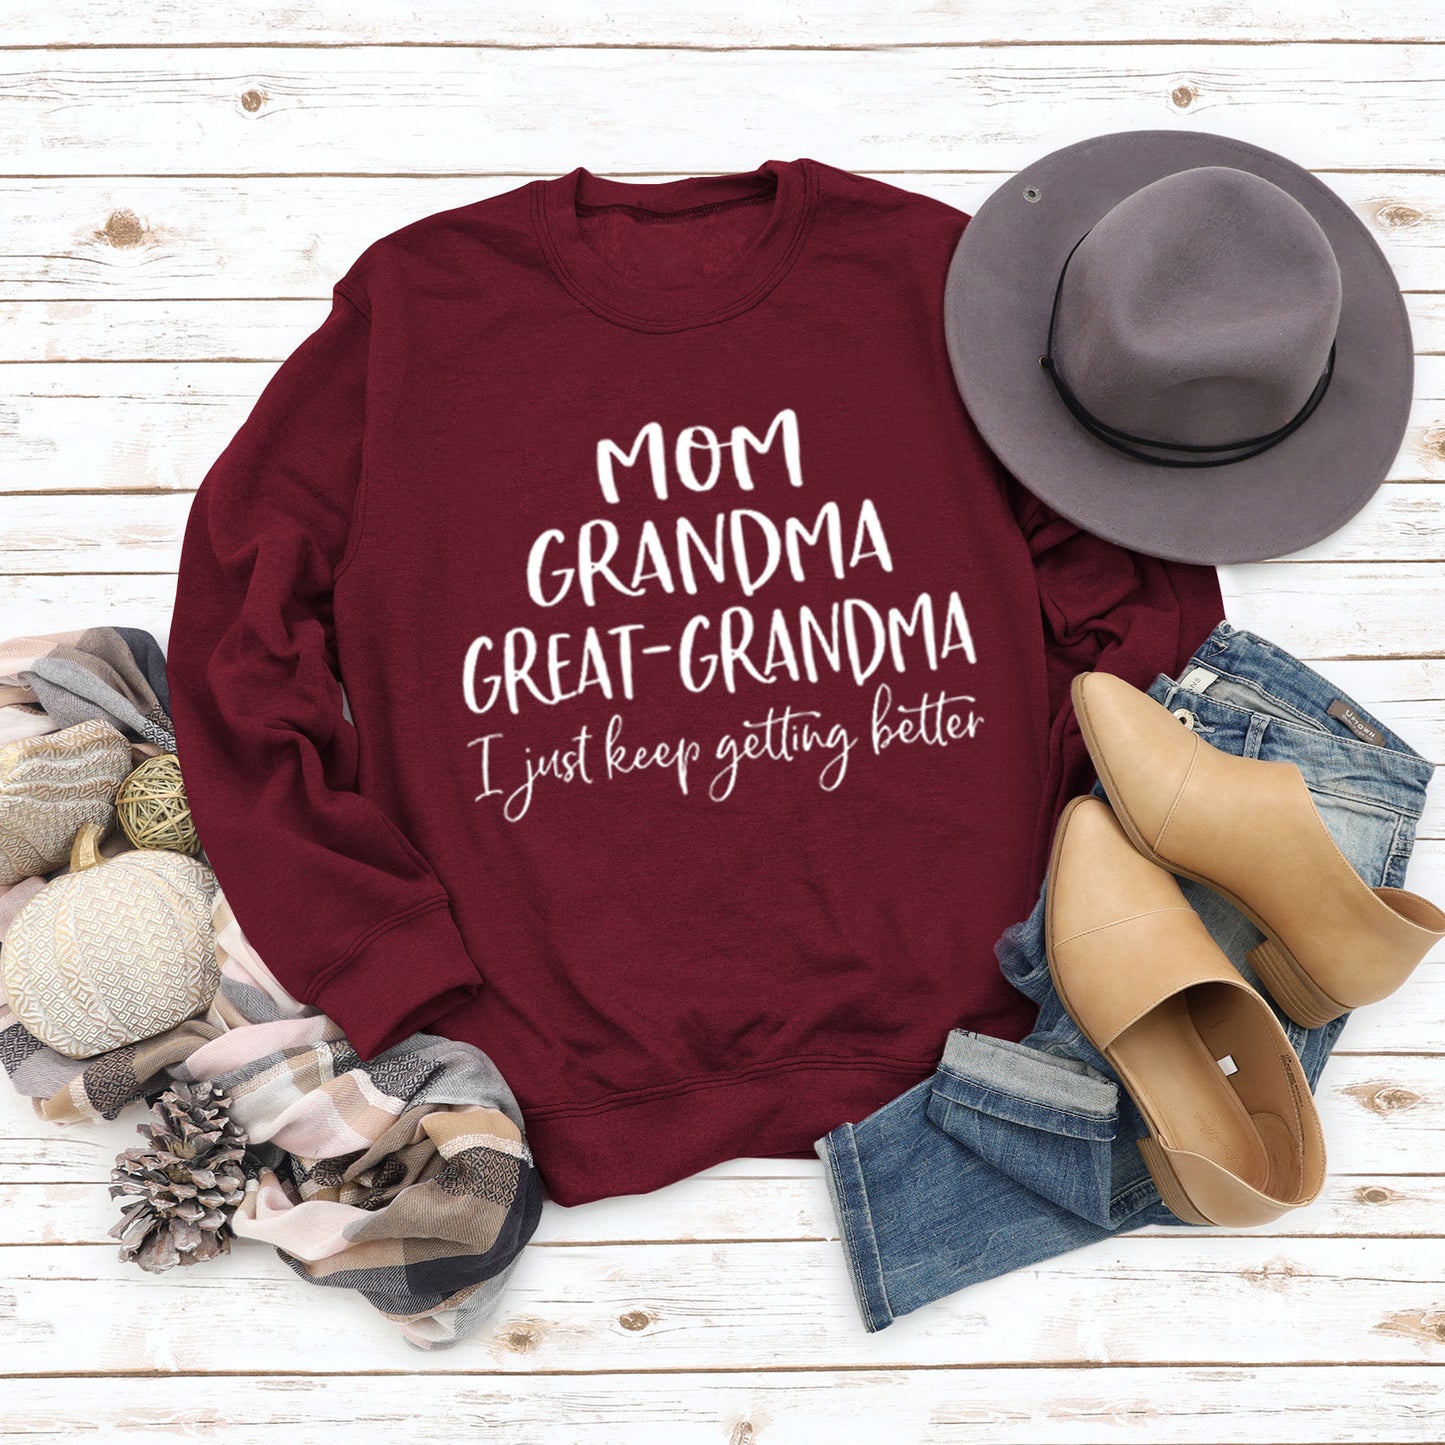 Great-Grandma Sweatshirt